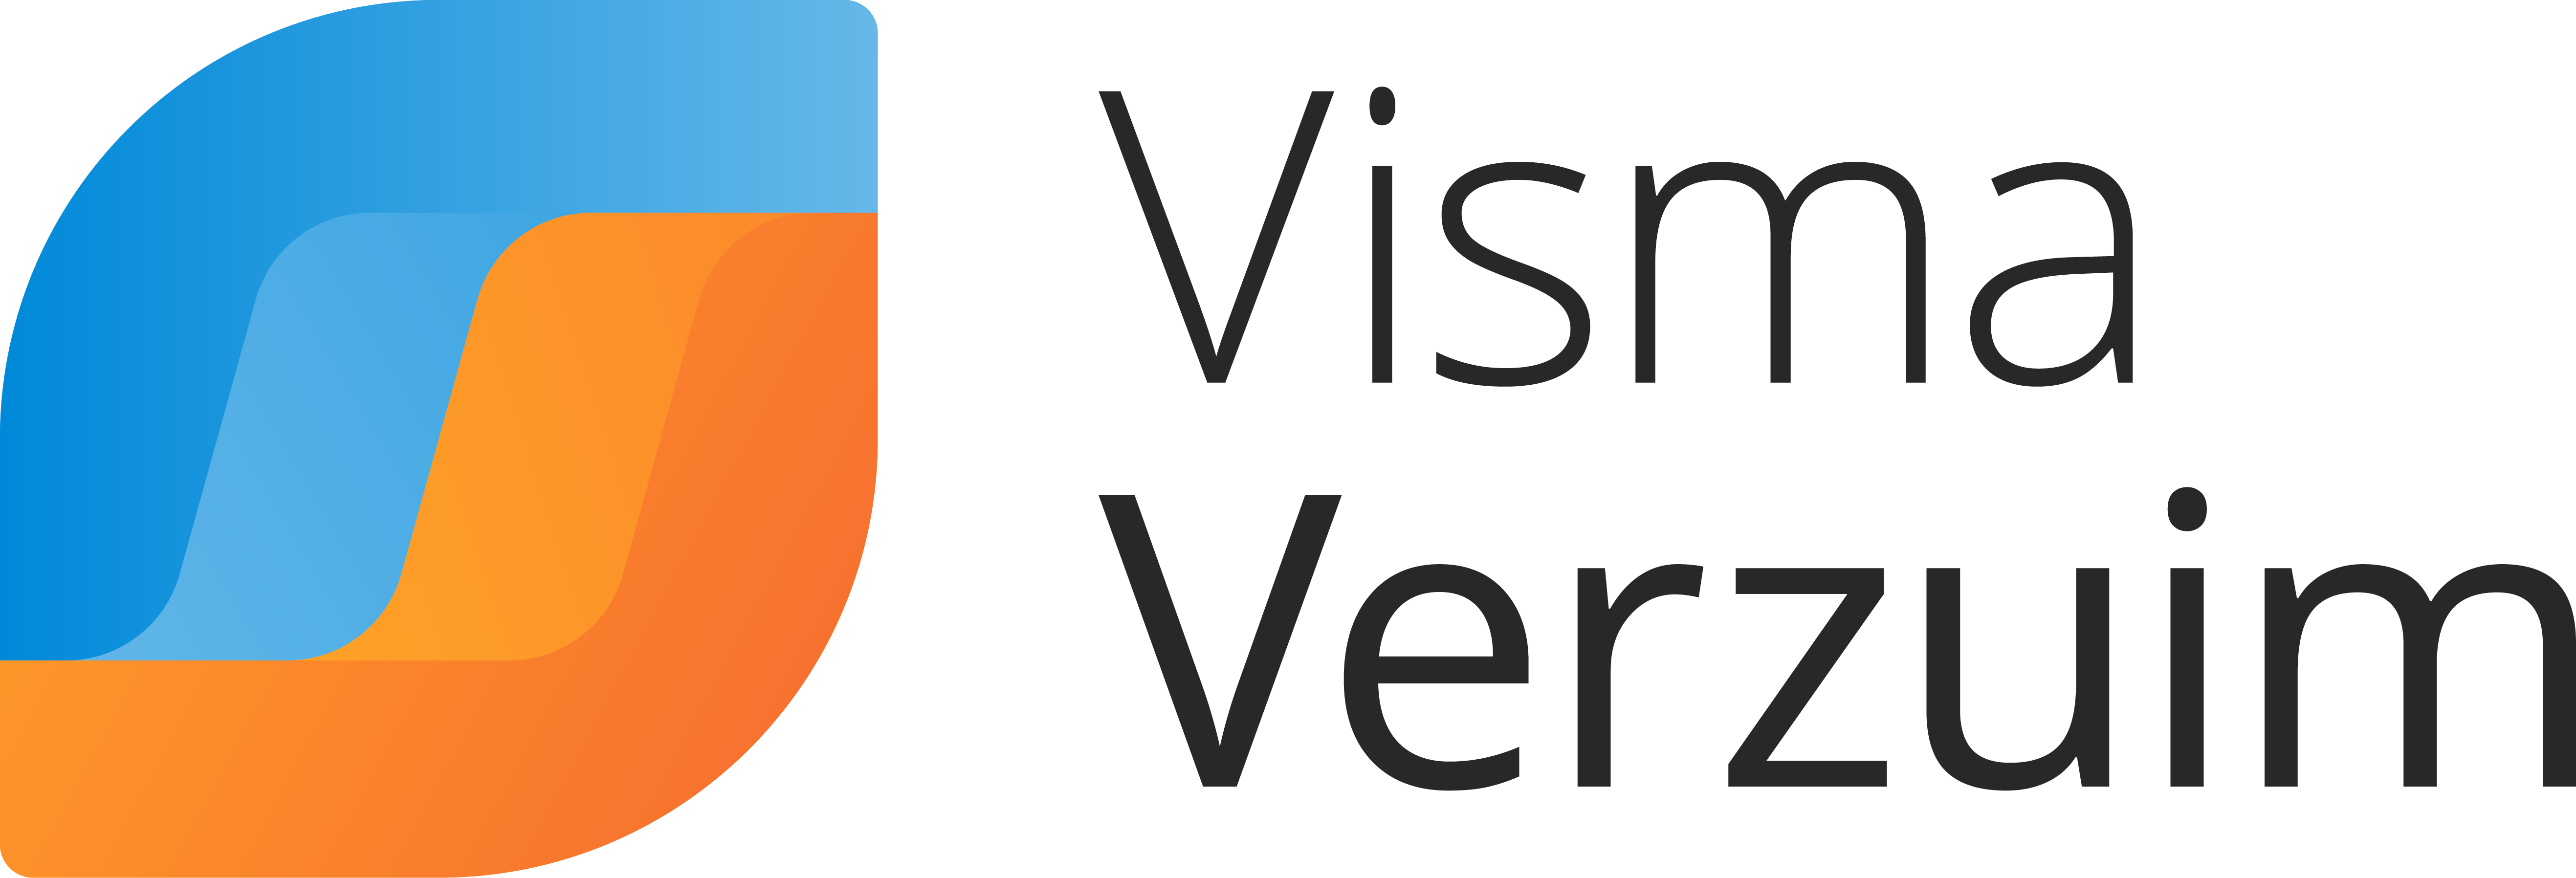 Officiele Visma Verzuim logo FC 20 juli